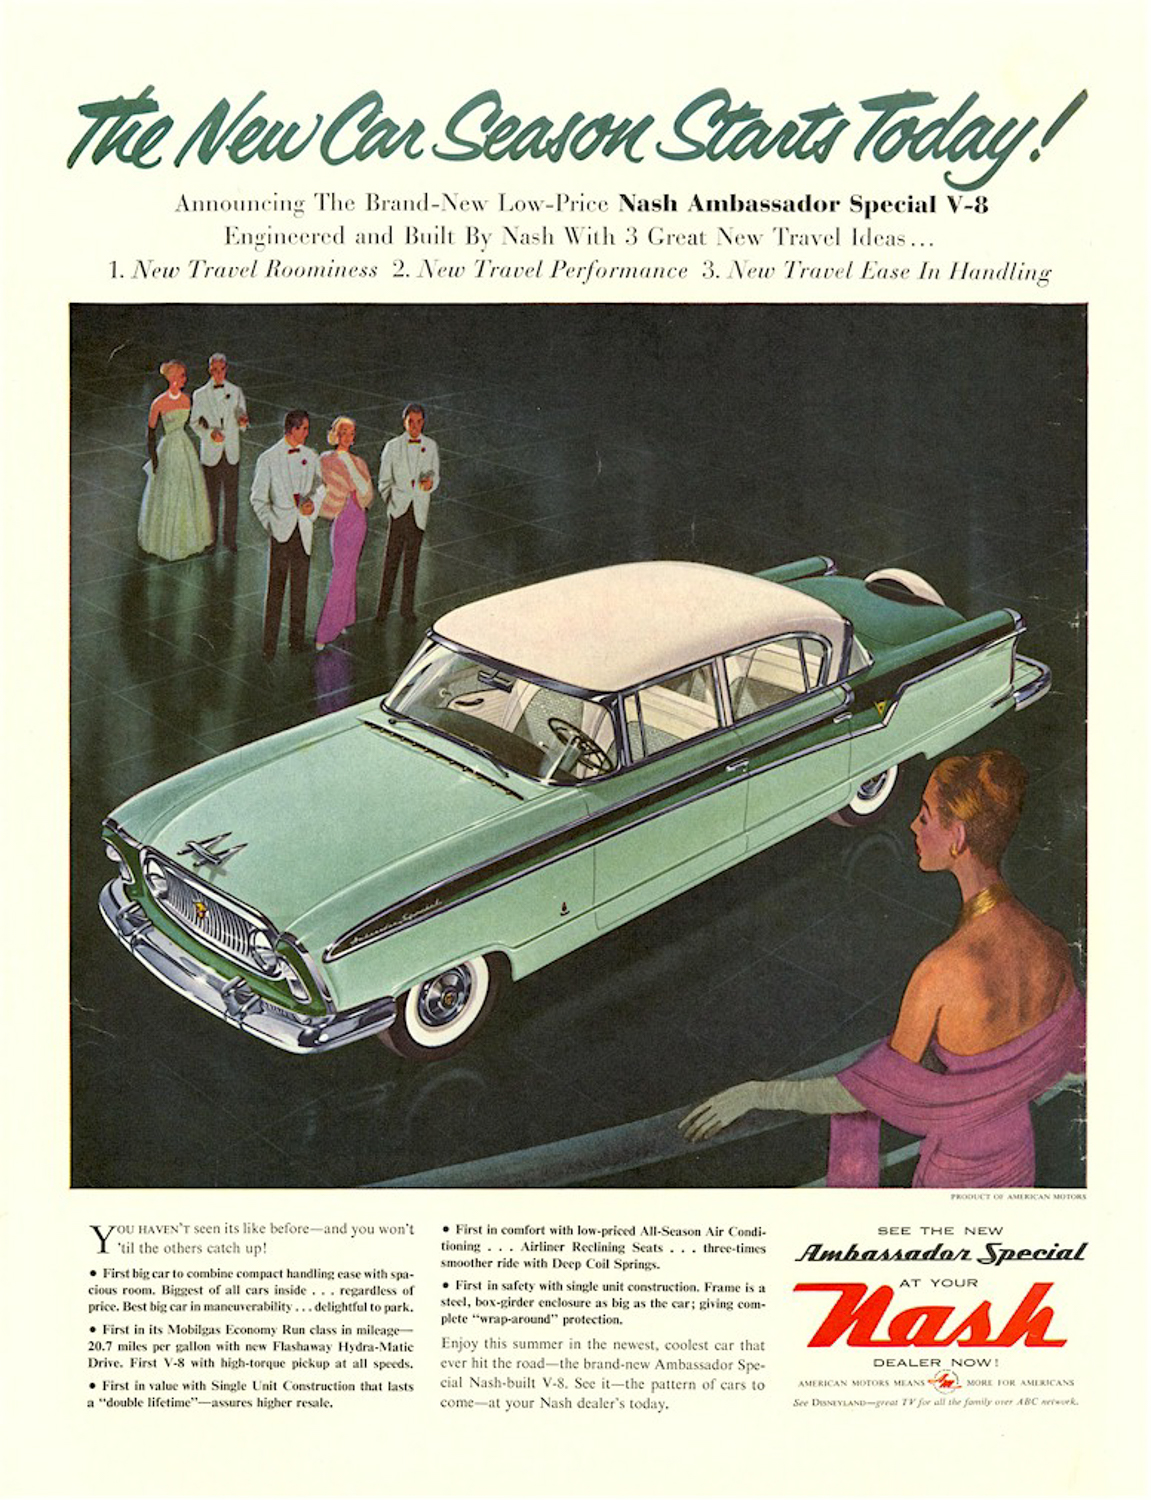 The Nash Ambassador was a Farina design. 